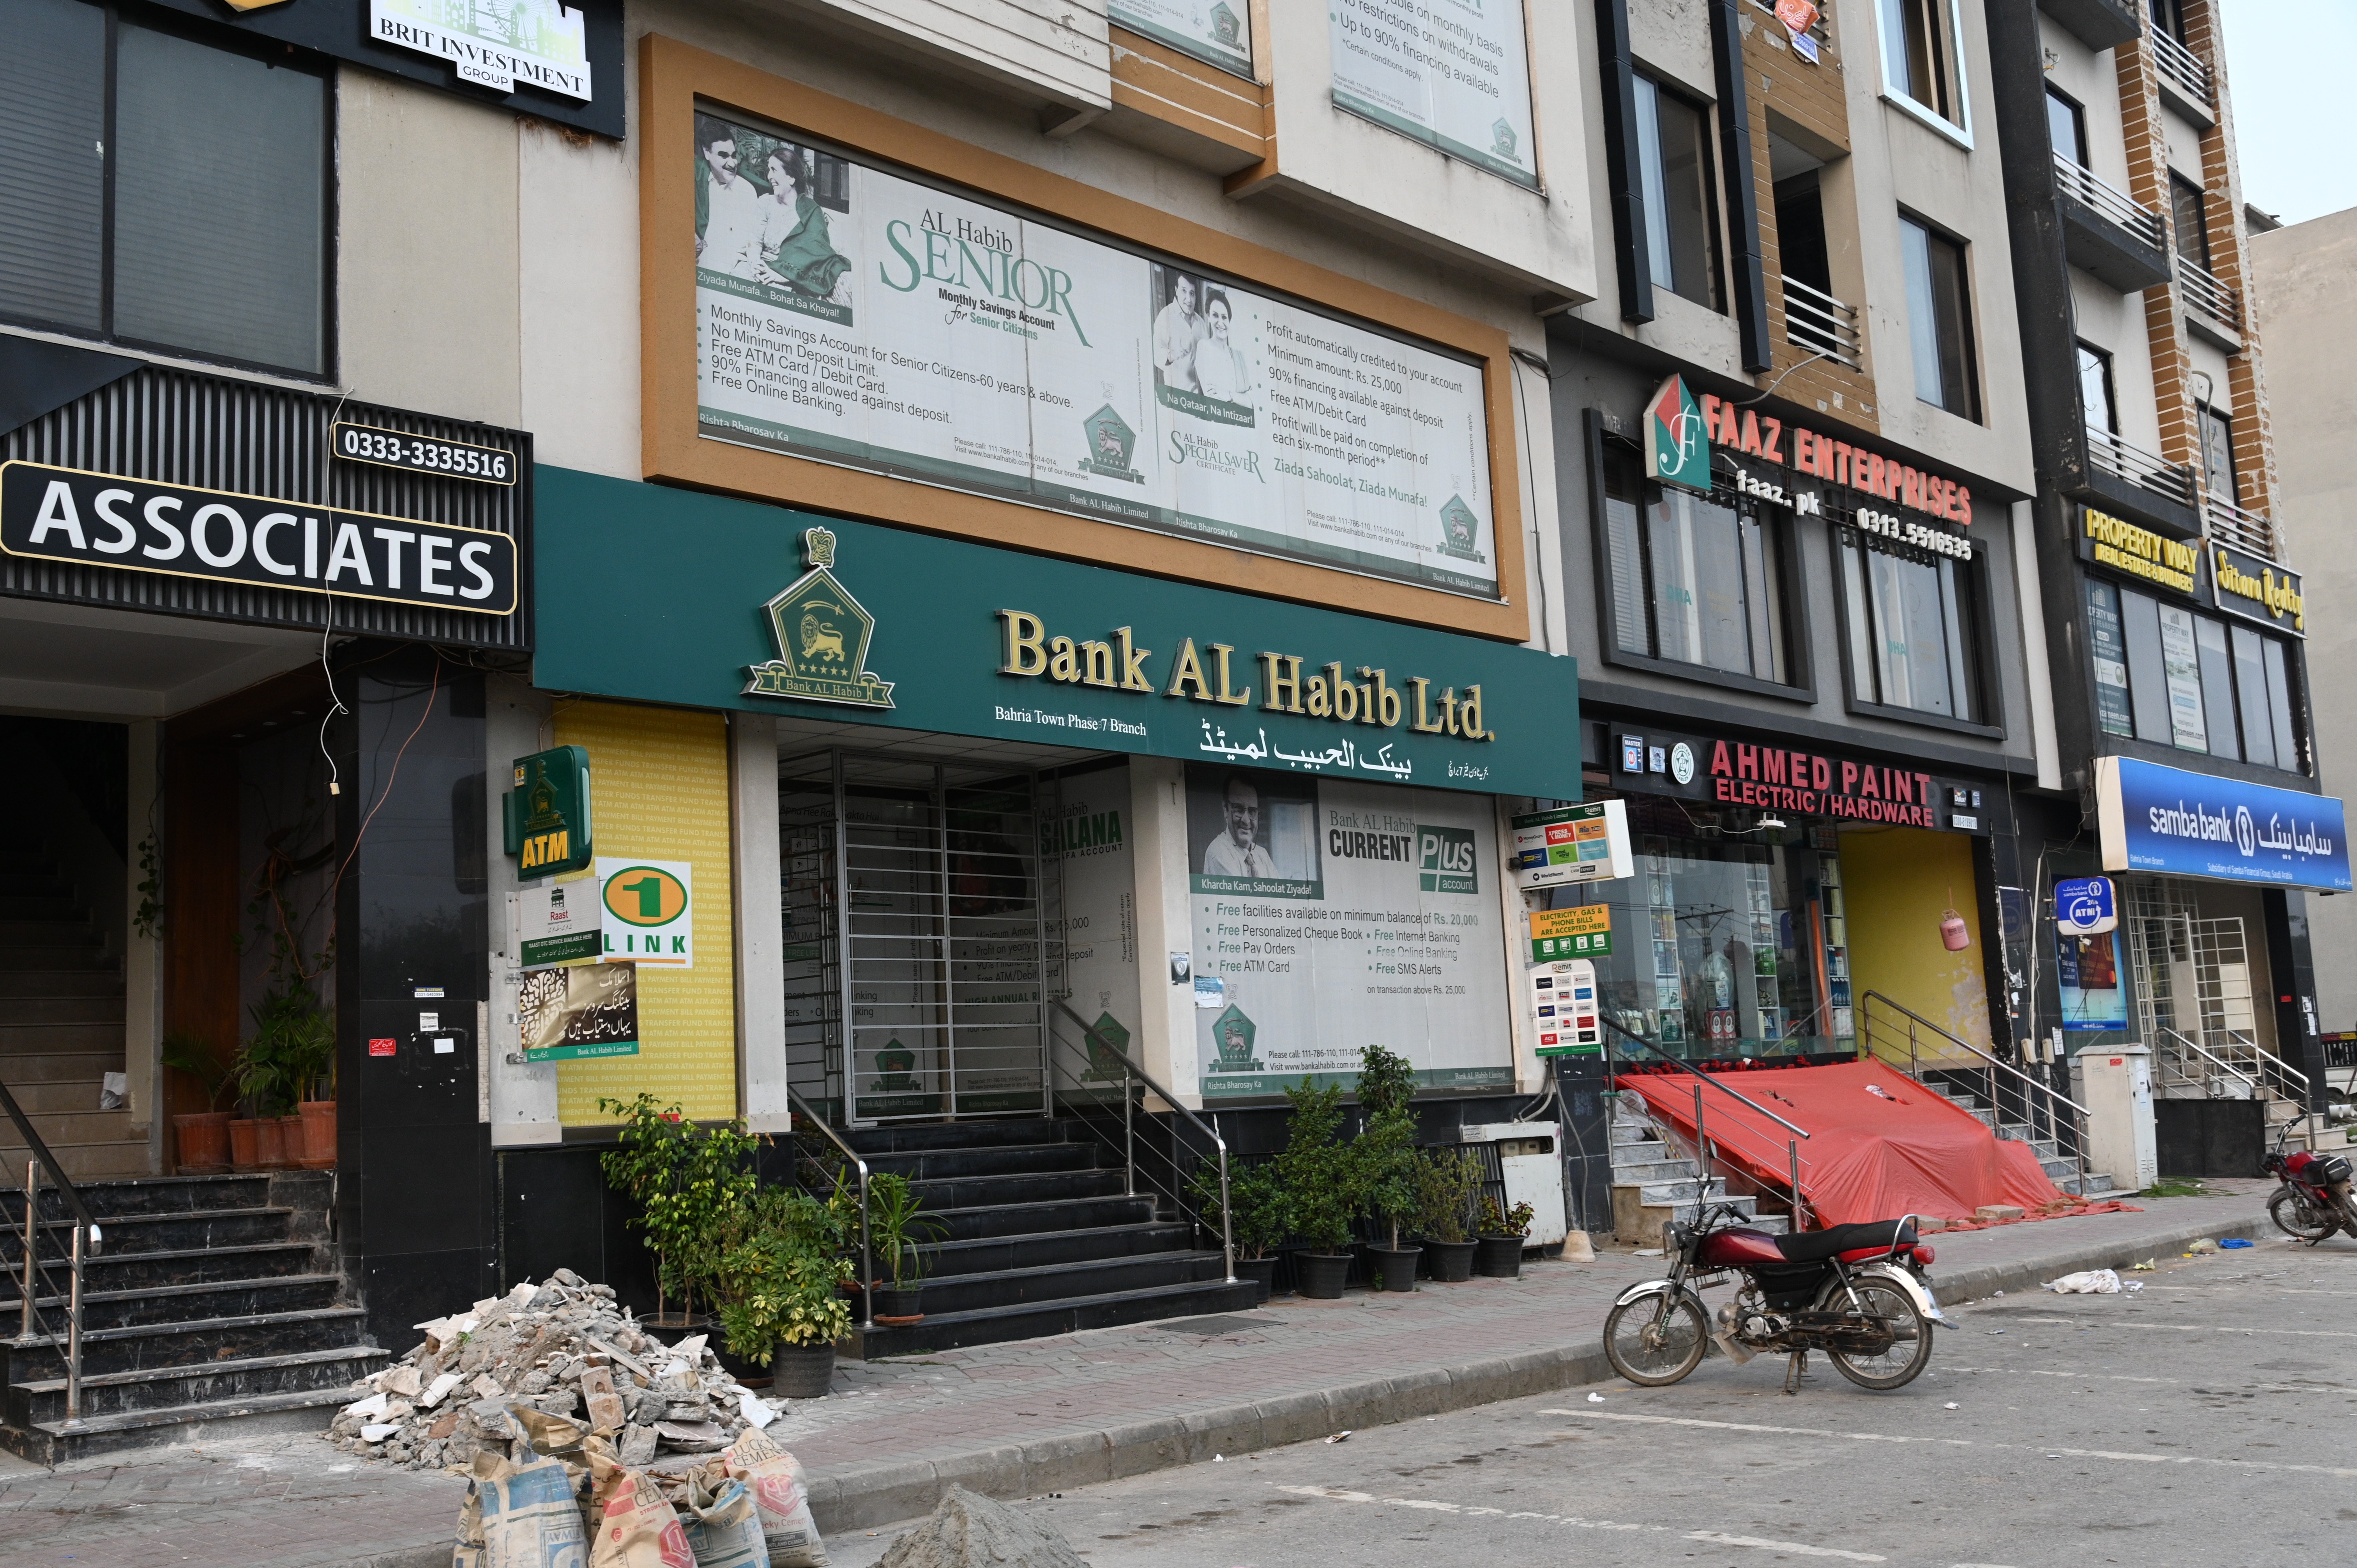 Bank AL Habib Ltd, Bahria Town Phase VII Branch